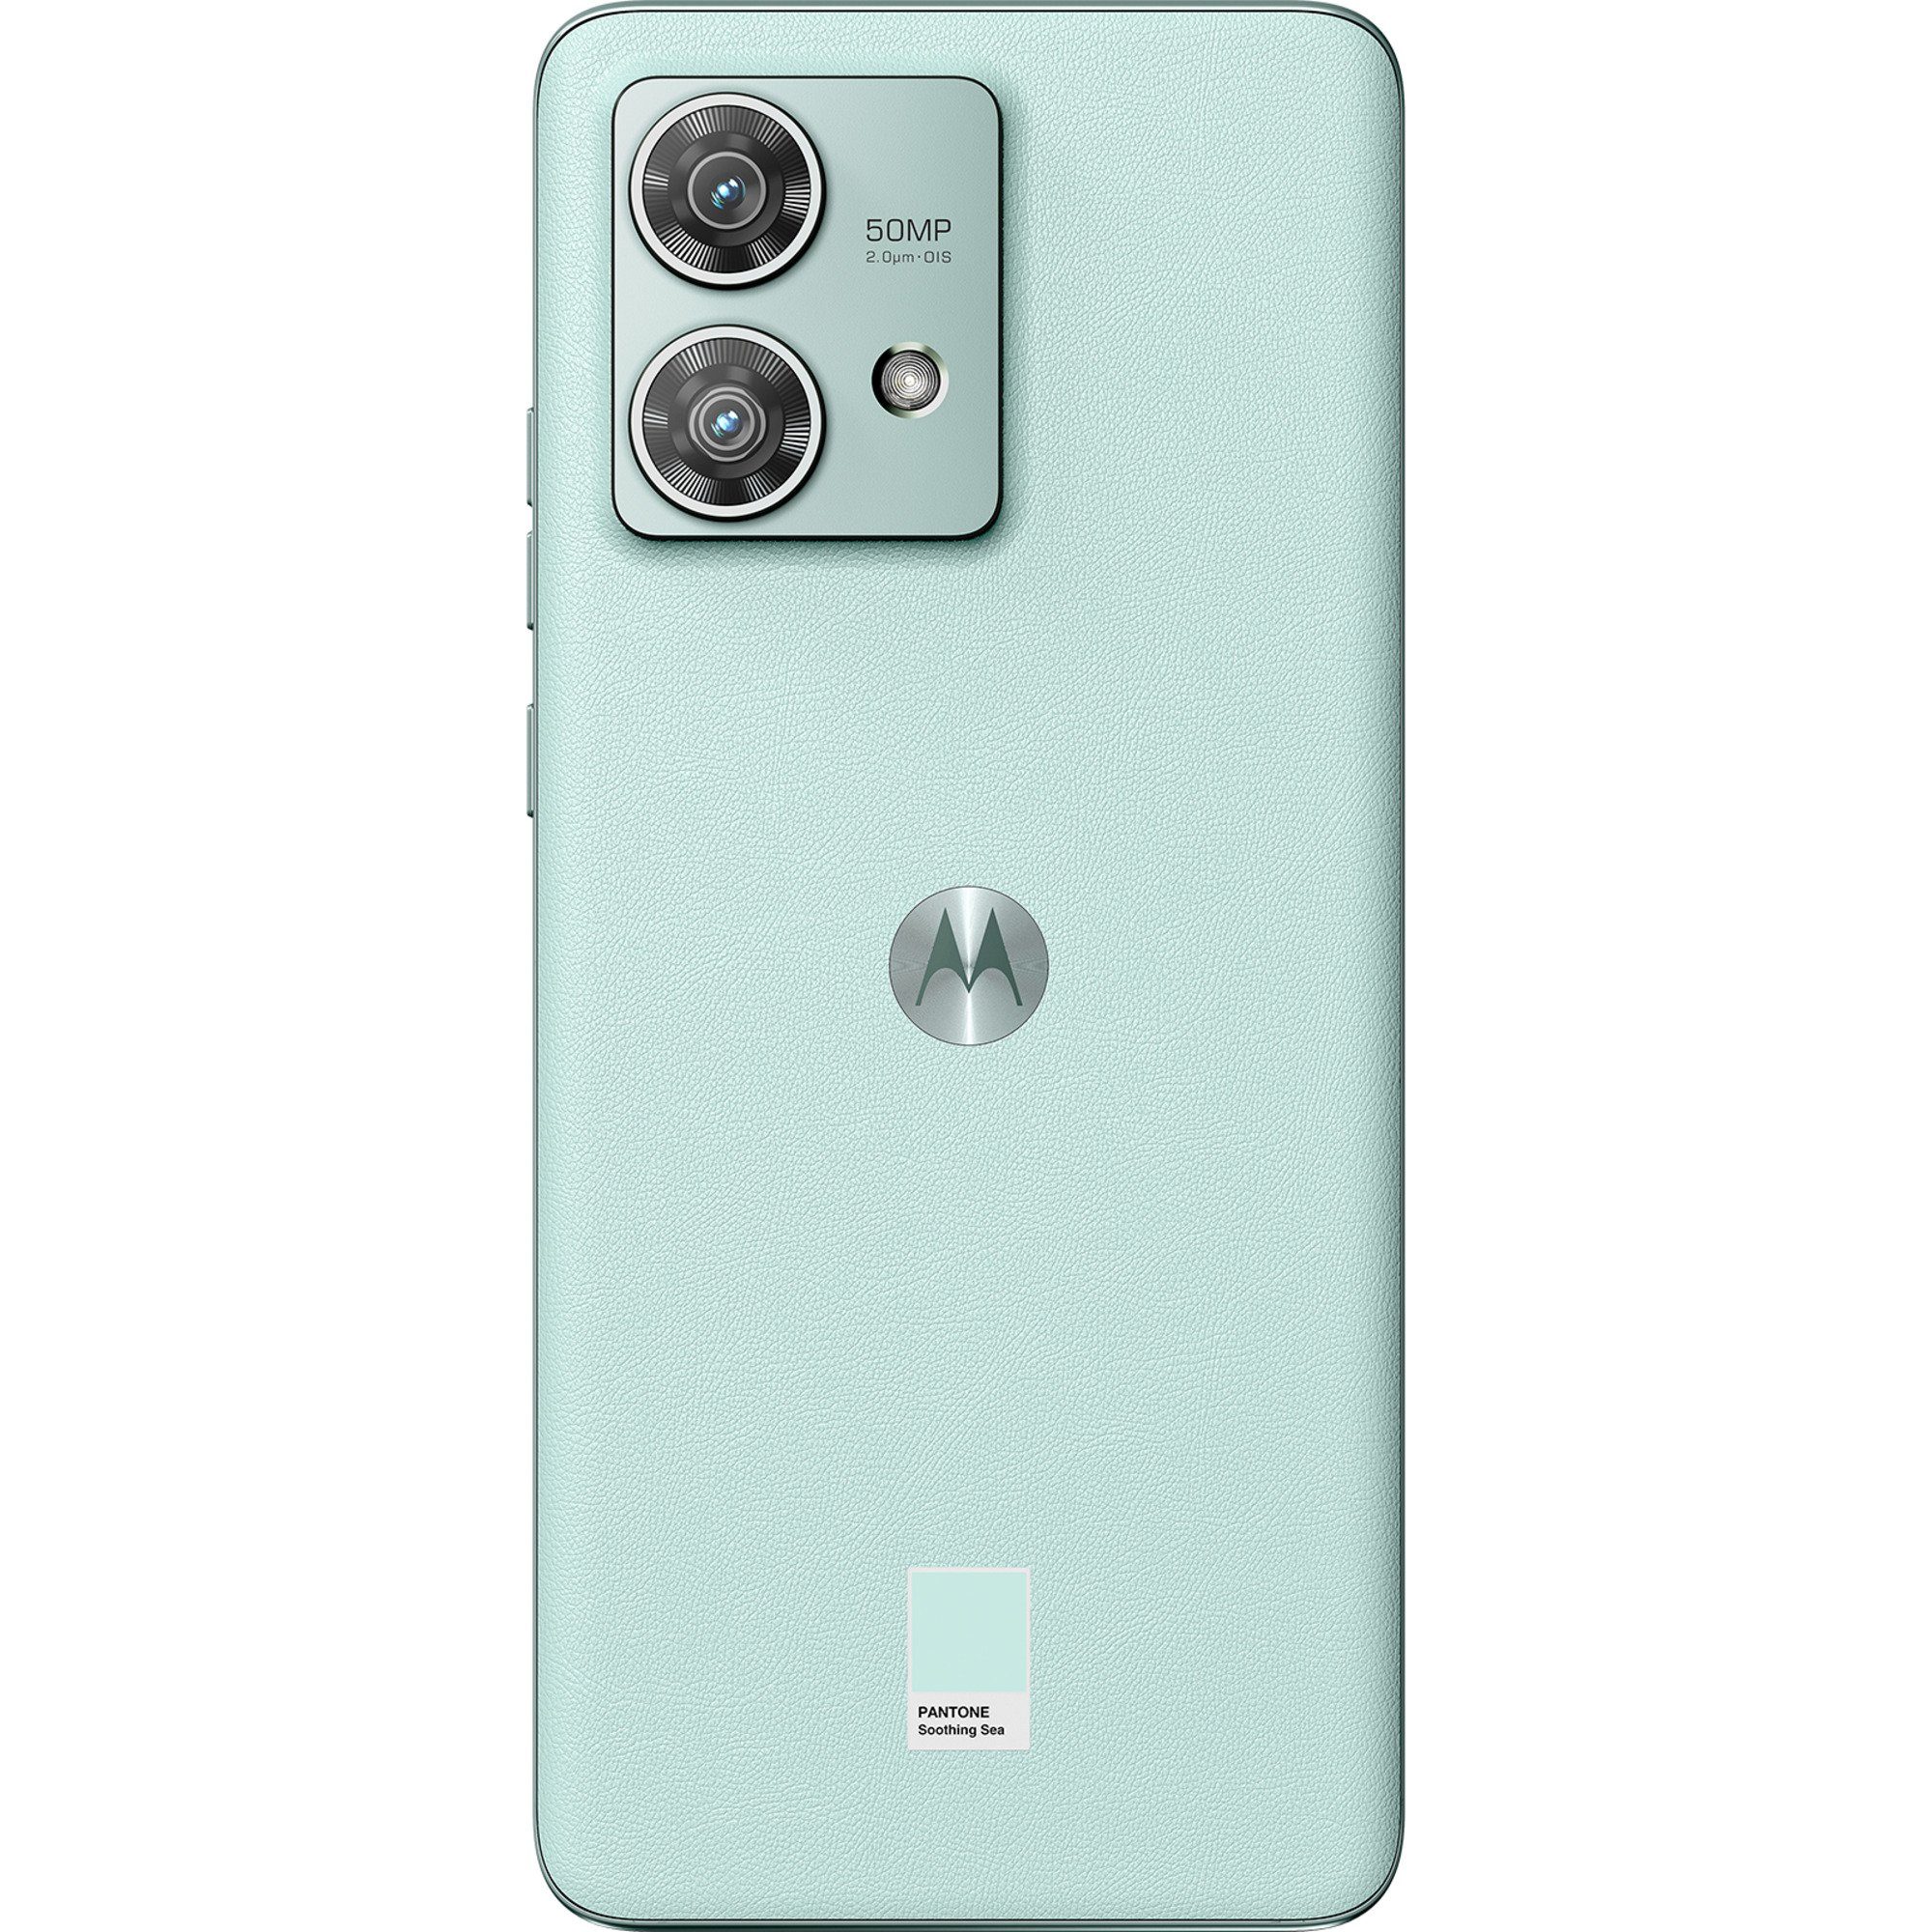 Smartphone 256GB, (Caneel MP Neo Bay, 40 edge Motorola Motorola (50 Kamera) Handy, MP